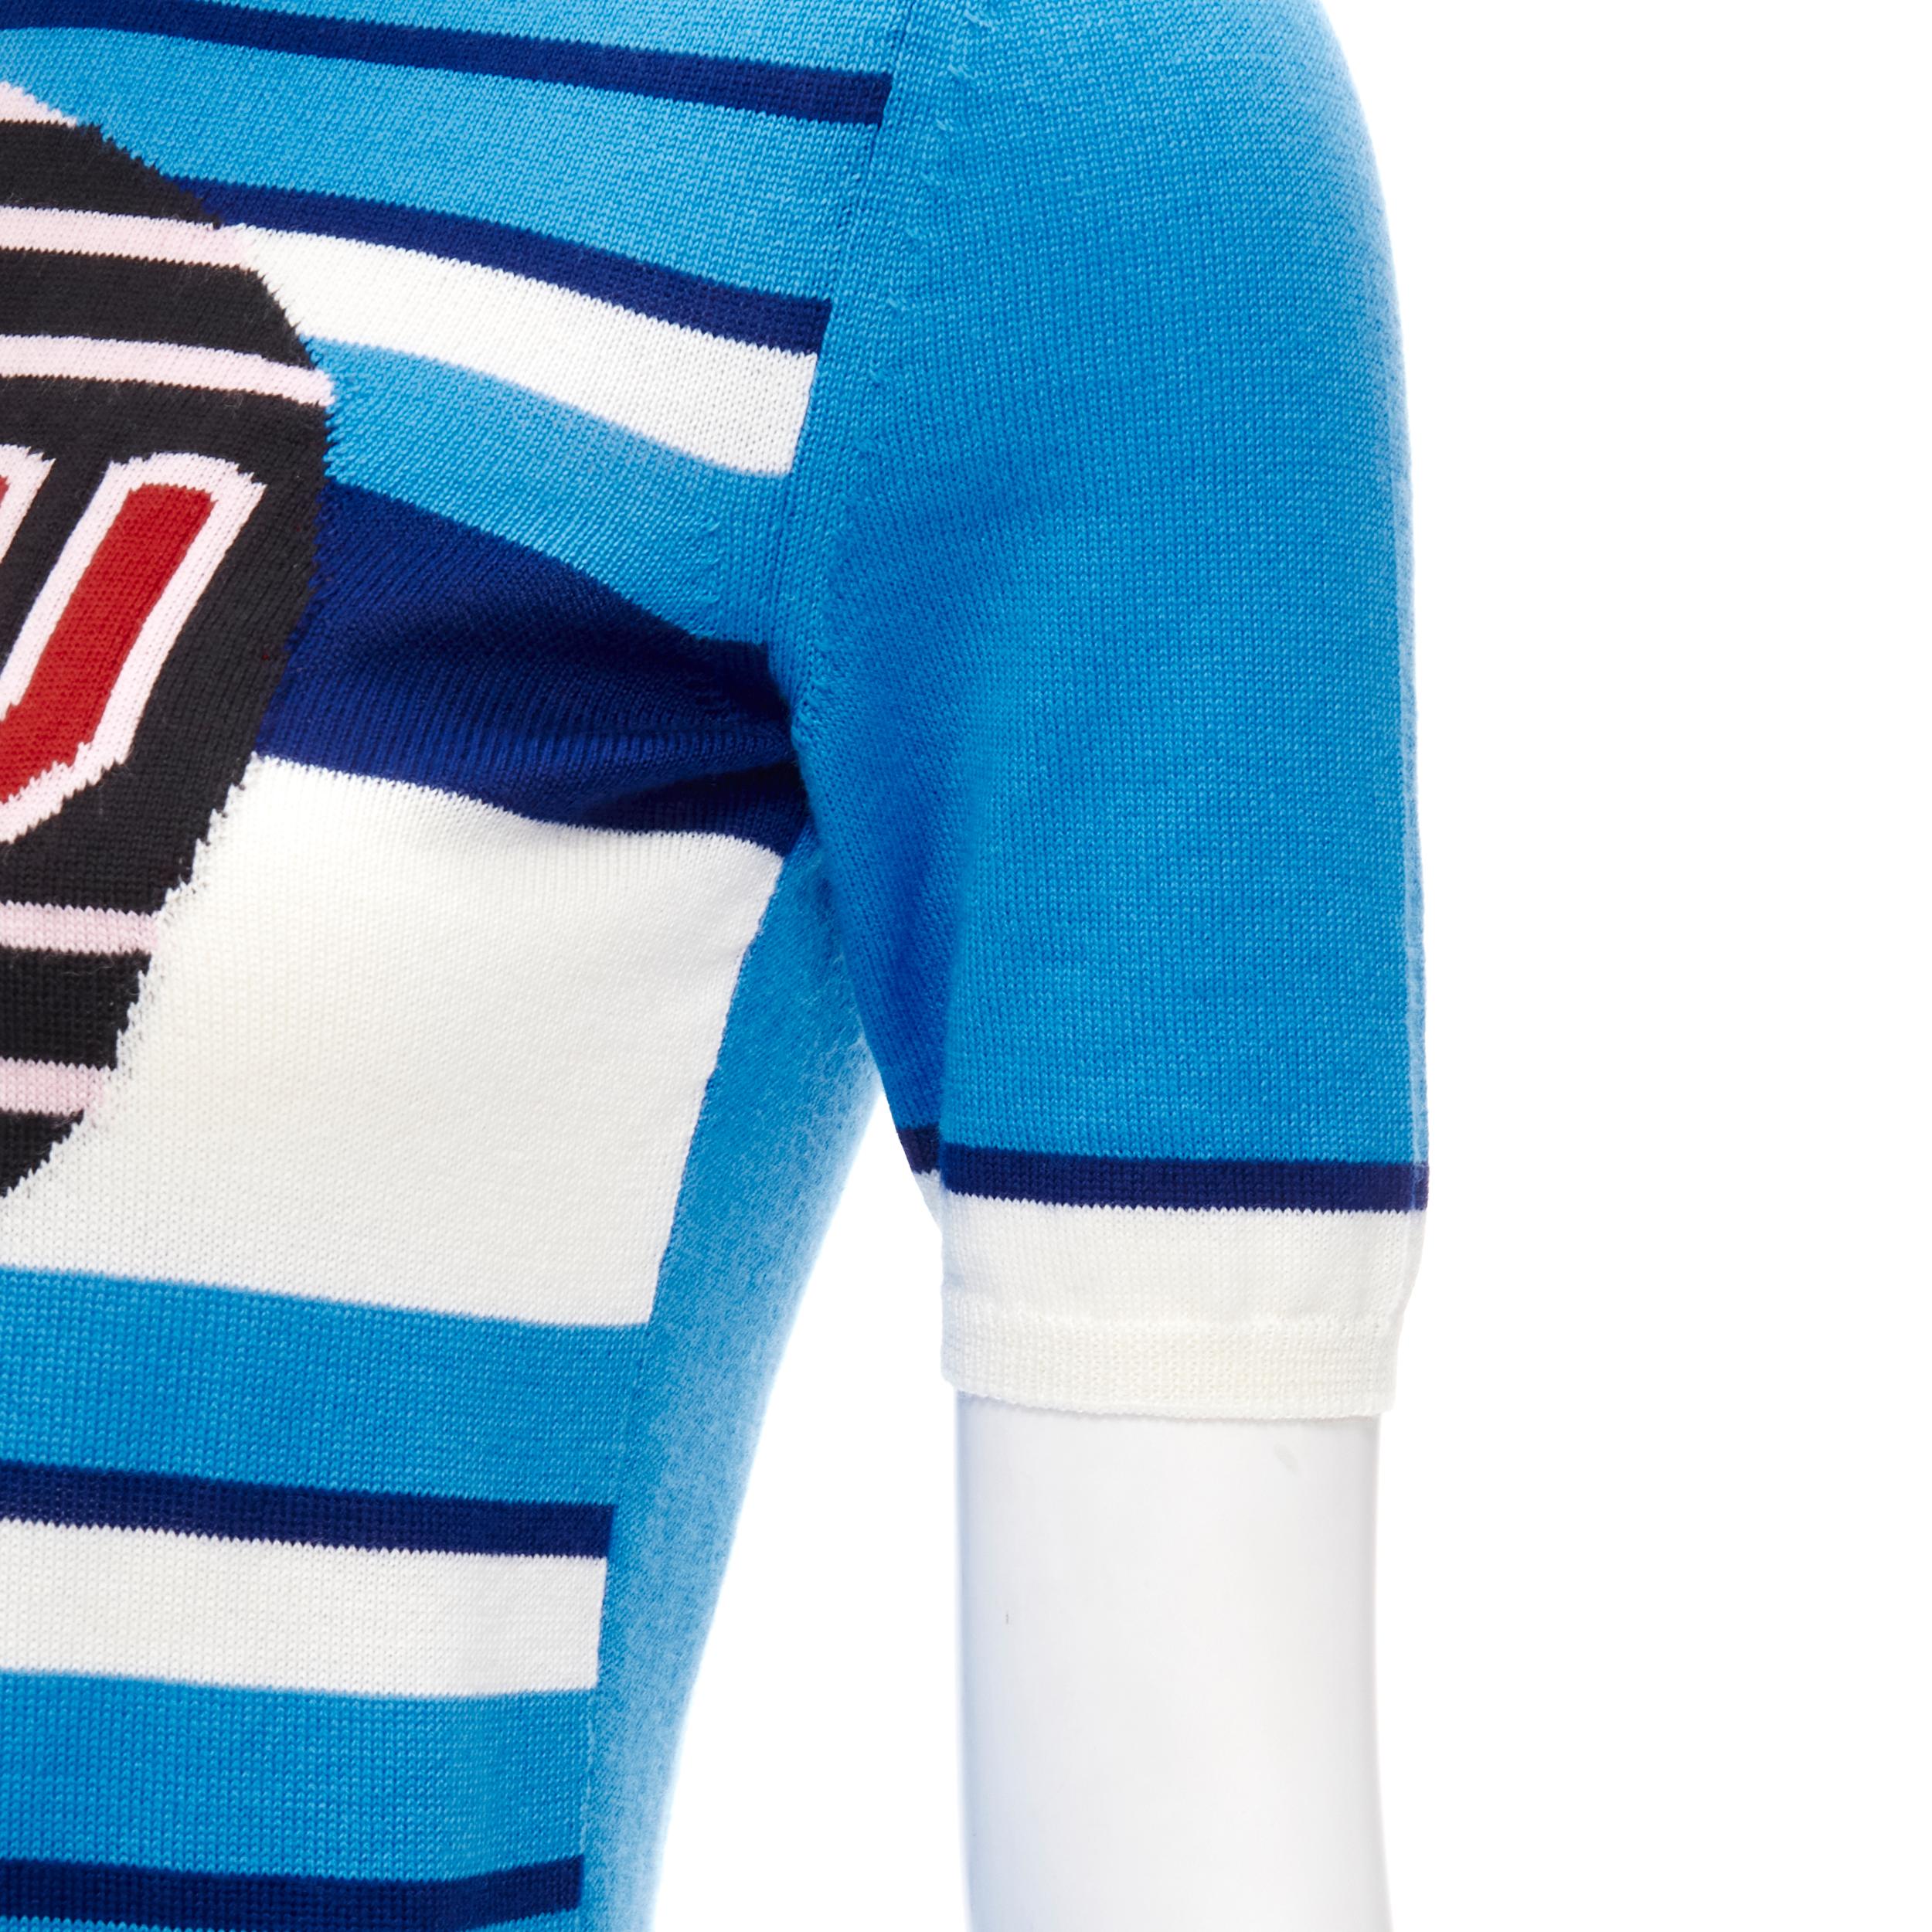 MIU MIU blue graphic circle logo striped knitted sweater top S 3